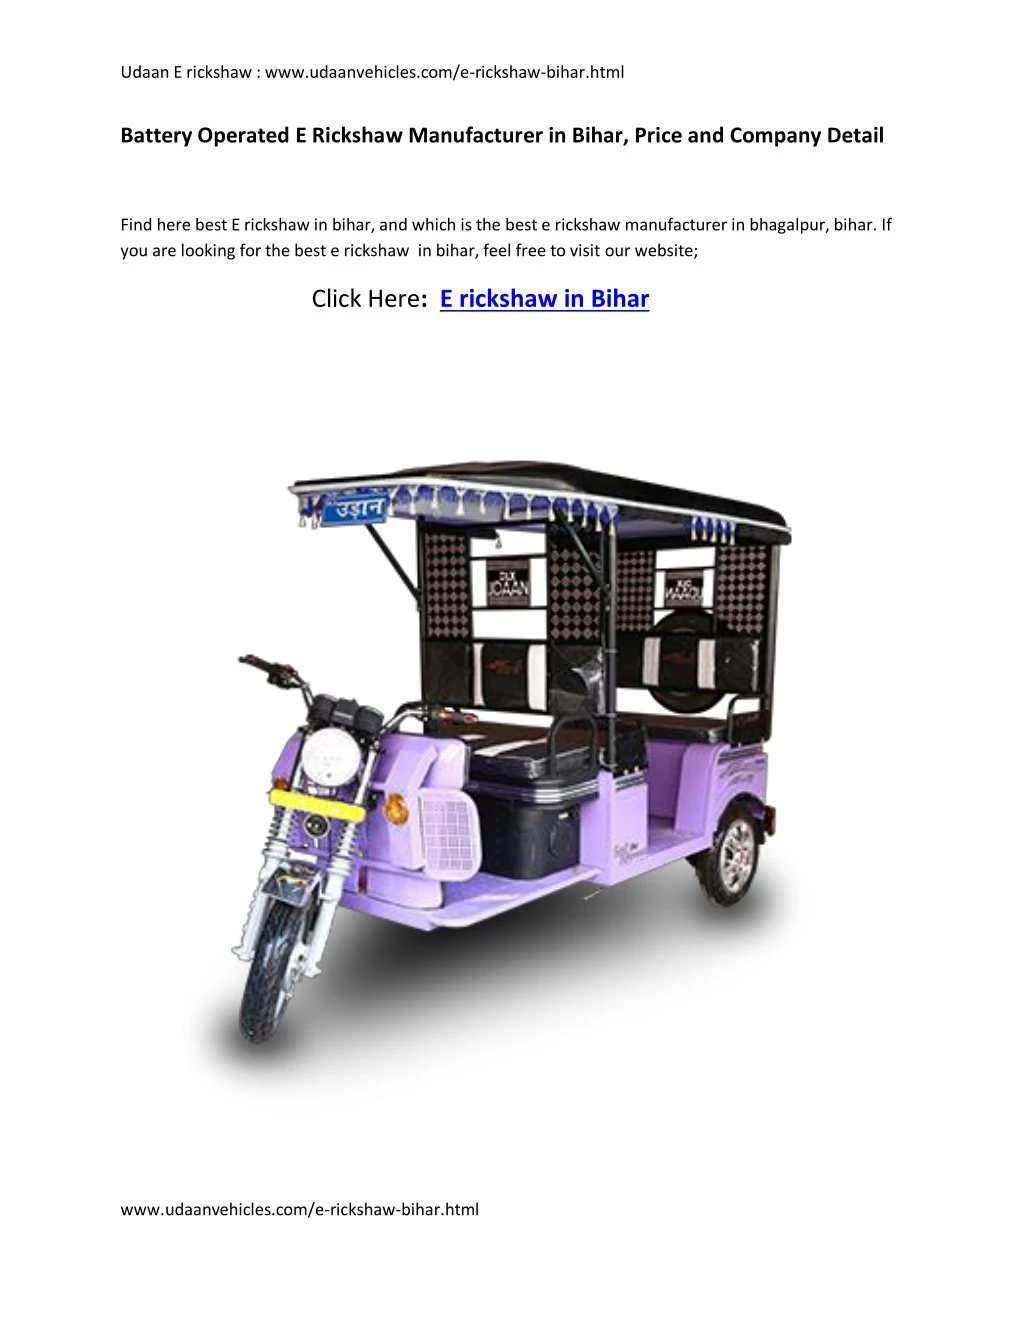 udaan e rickshaw www udaanvehicles com e rickshaw